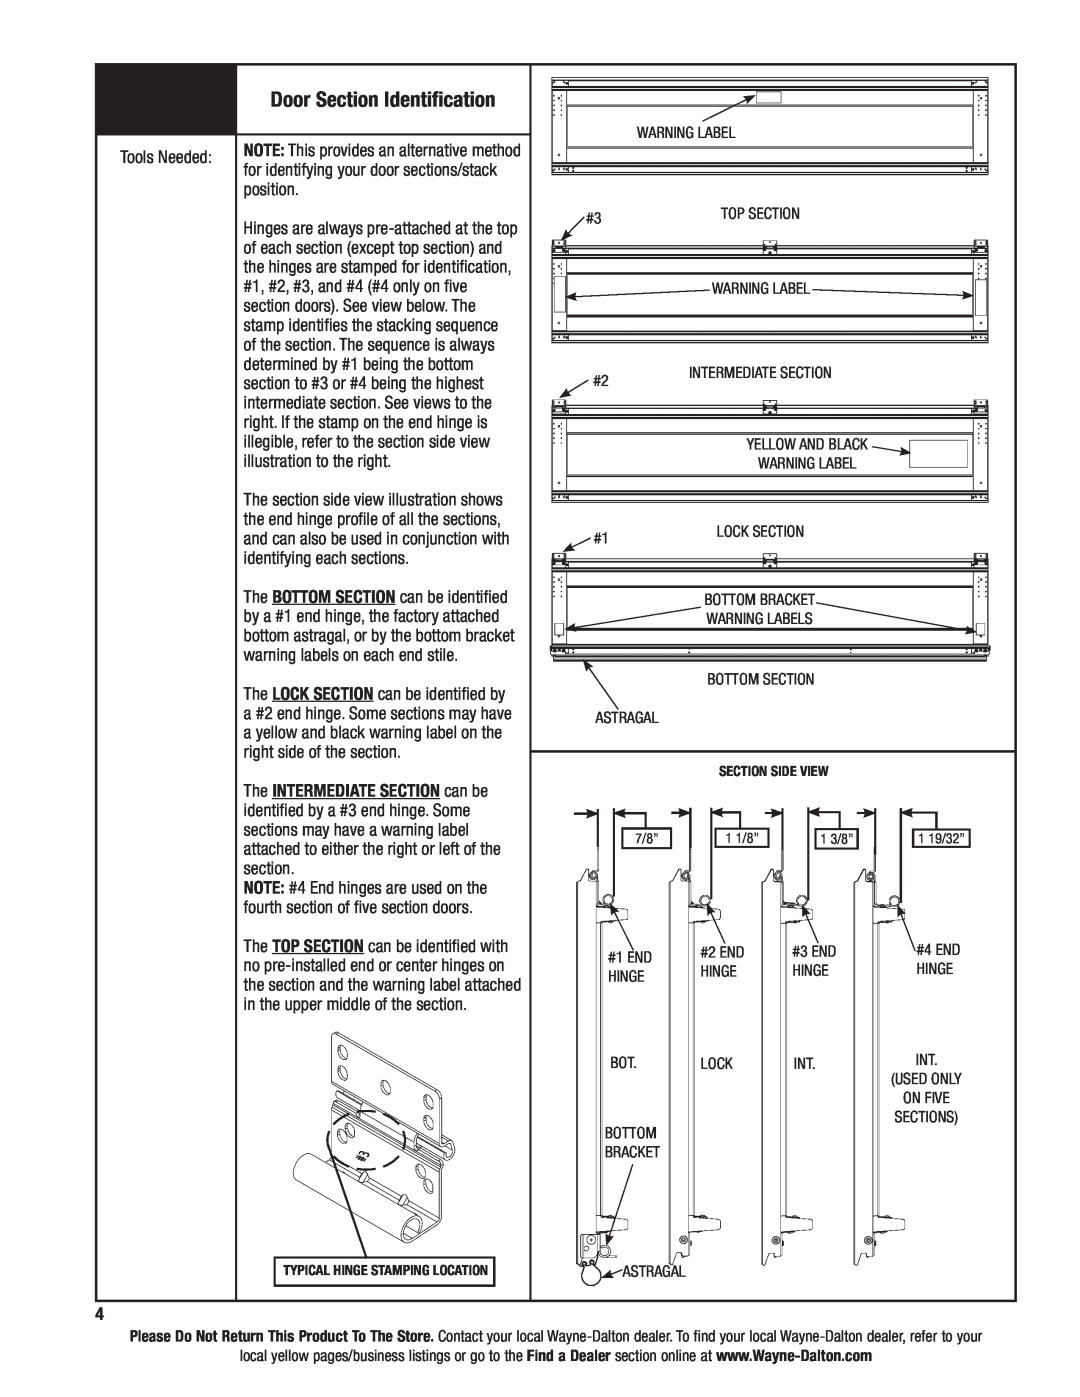 Wayne-Dalton 9600 installation instructions Door Section Identification 